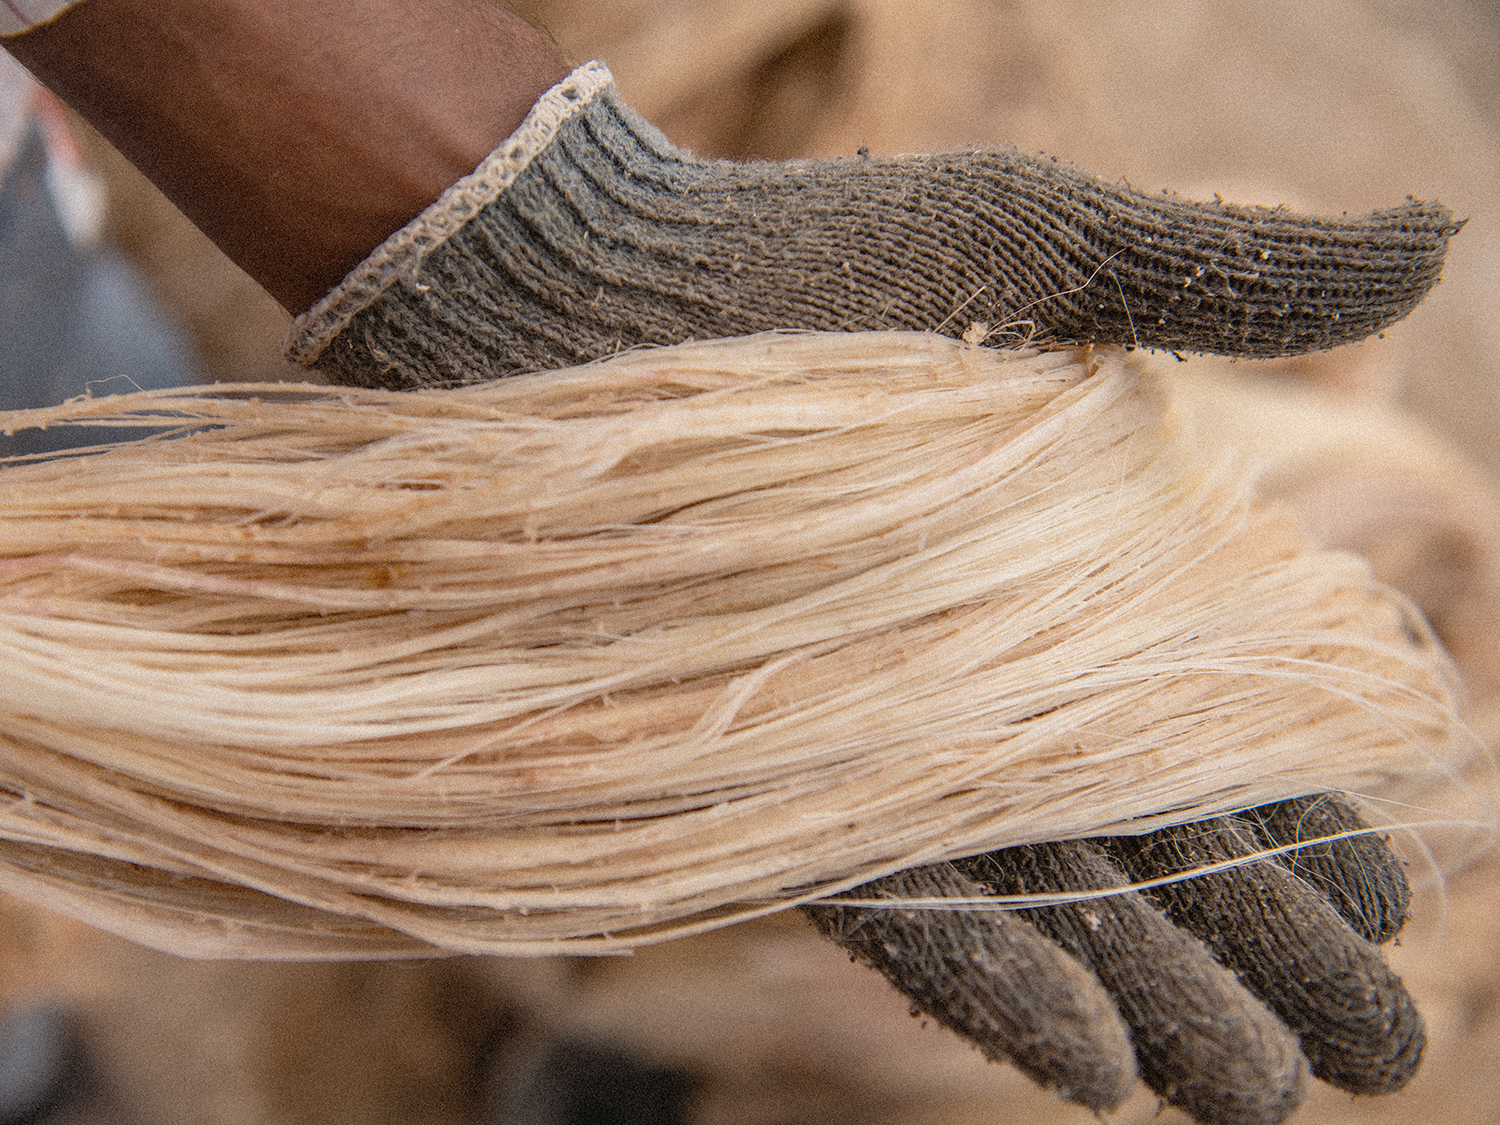 Loomshake yarn utilises waste banana fibres